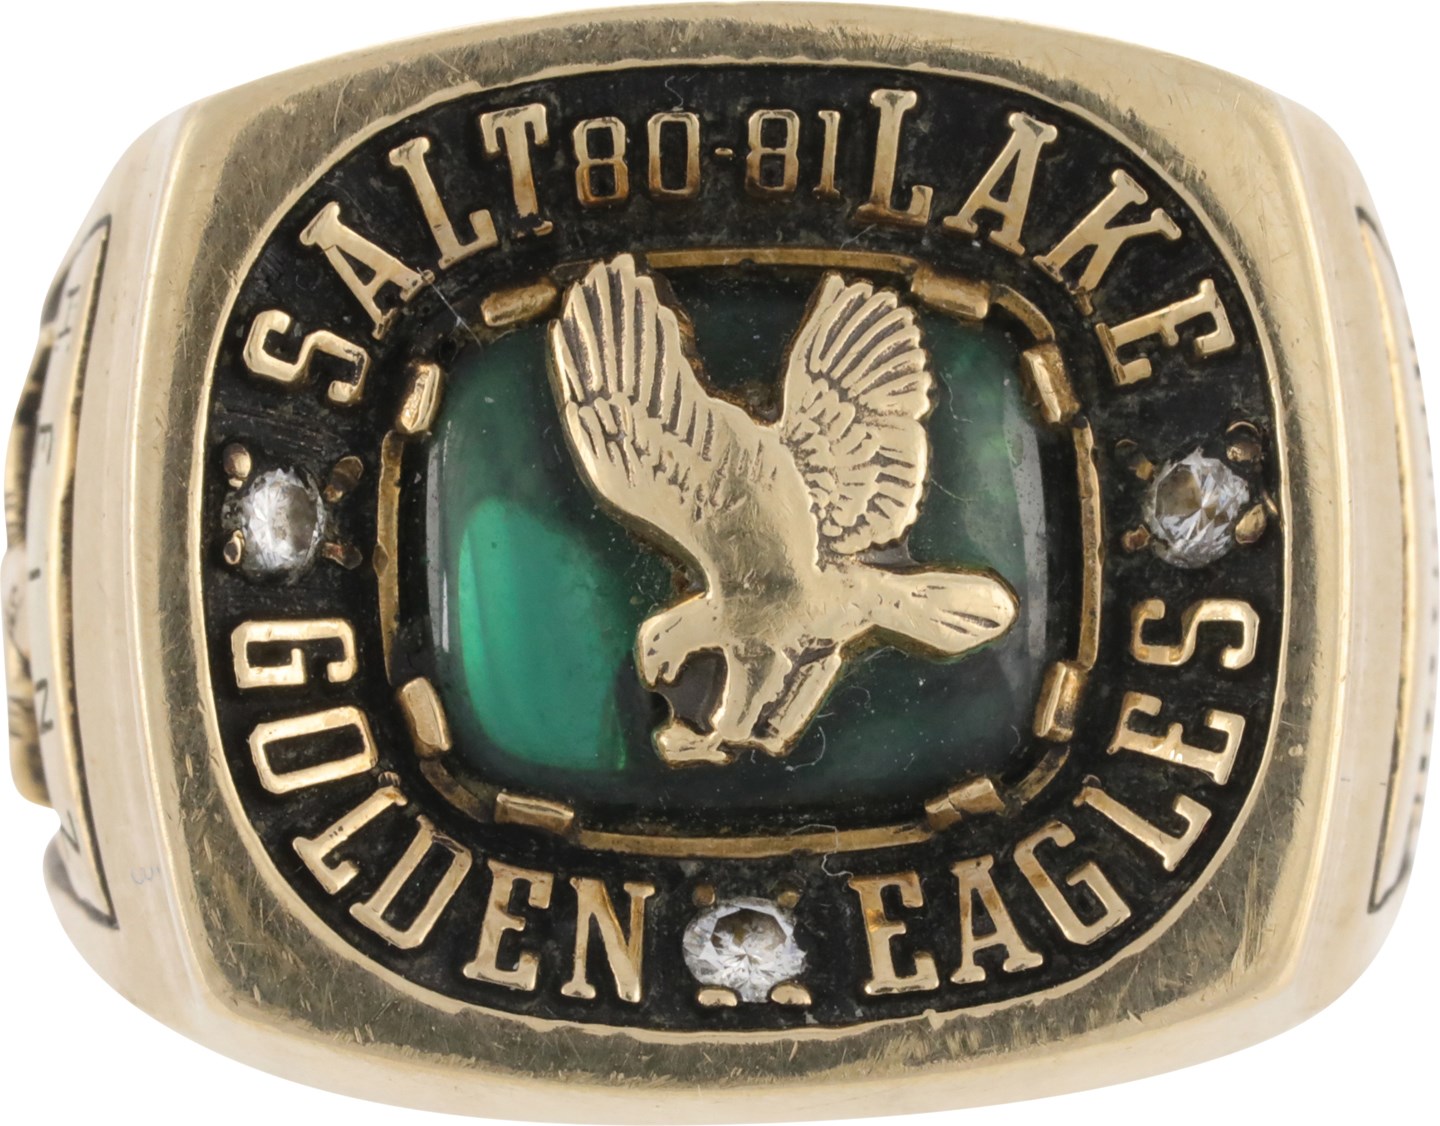 - 1980-81 Salt Lake Golden Eagles Central Hockey League Championship Player Ring (Heinz LOA)